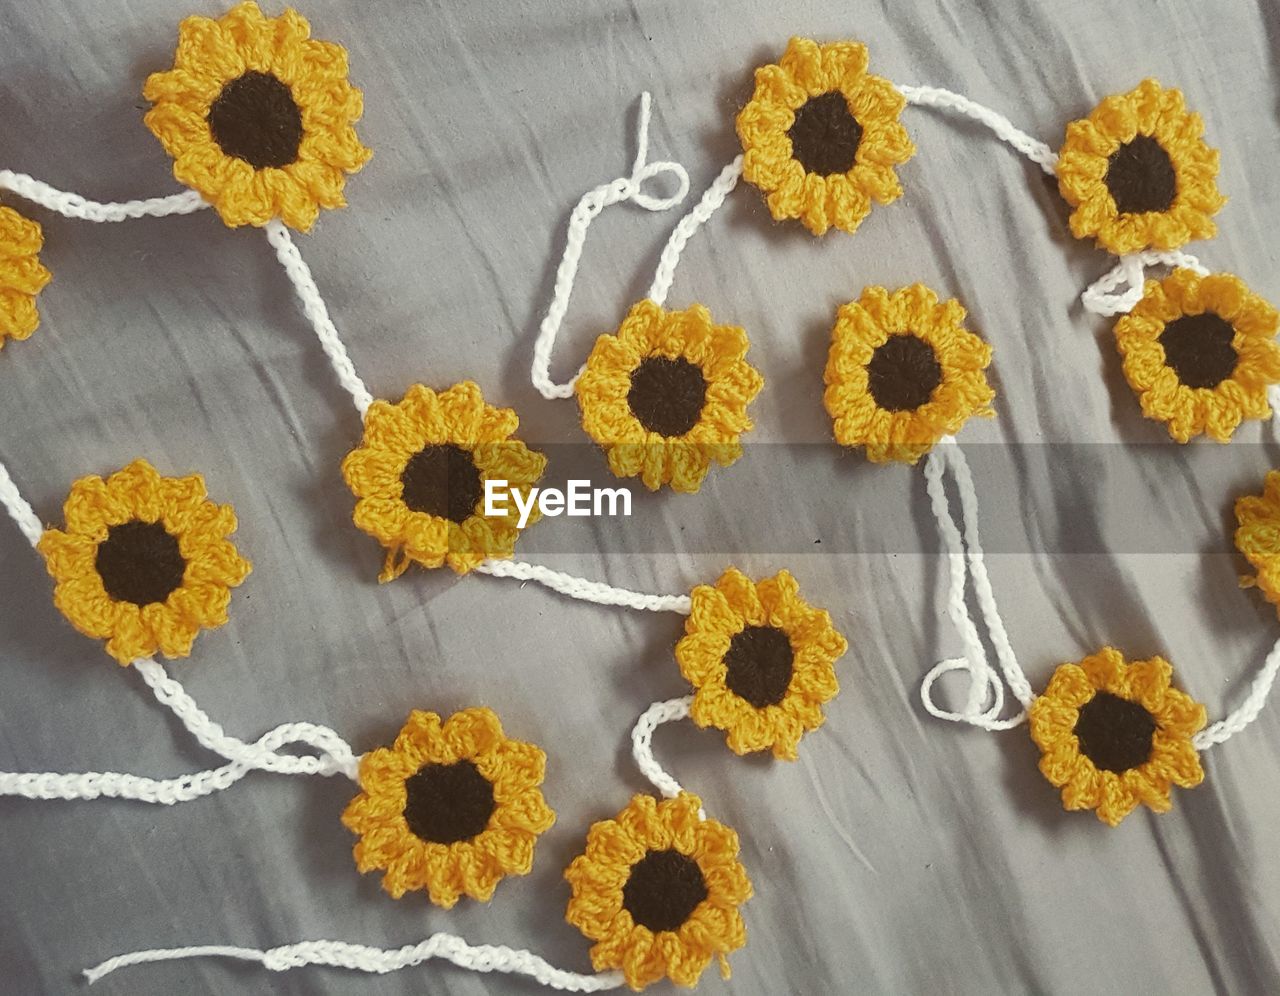 High angle view of crochet sunflowers